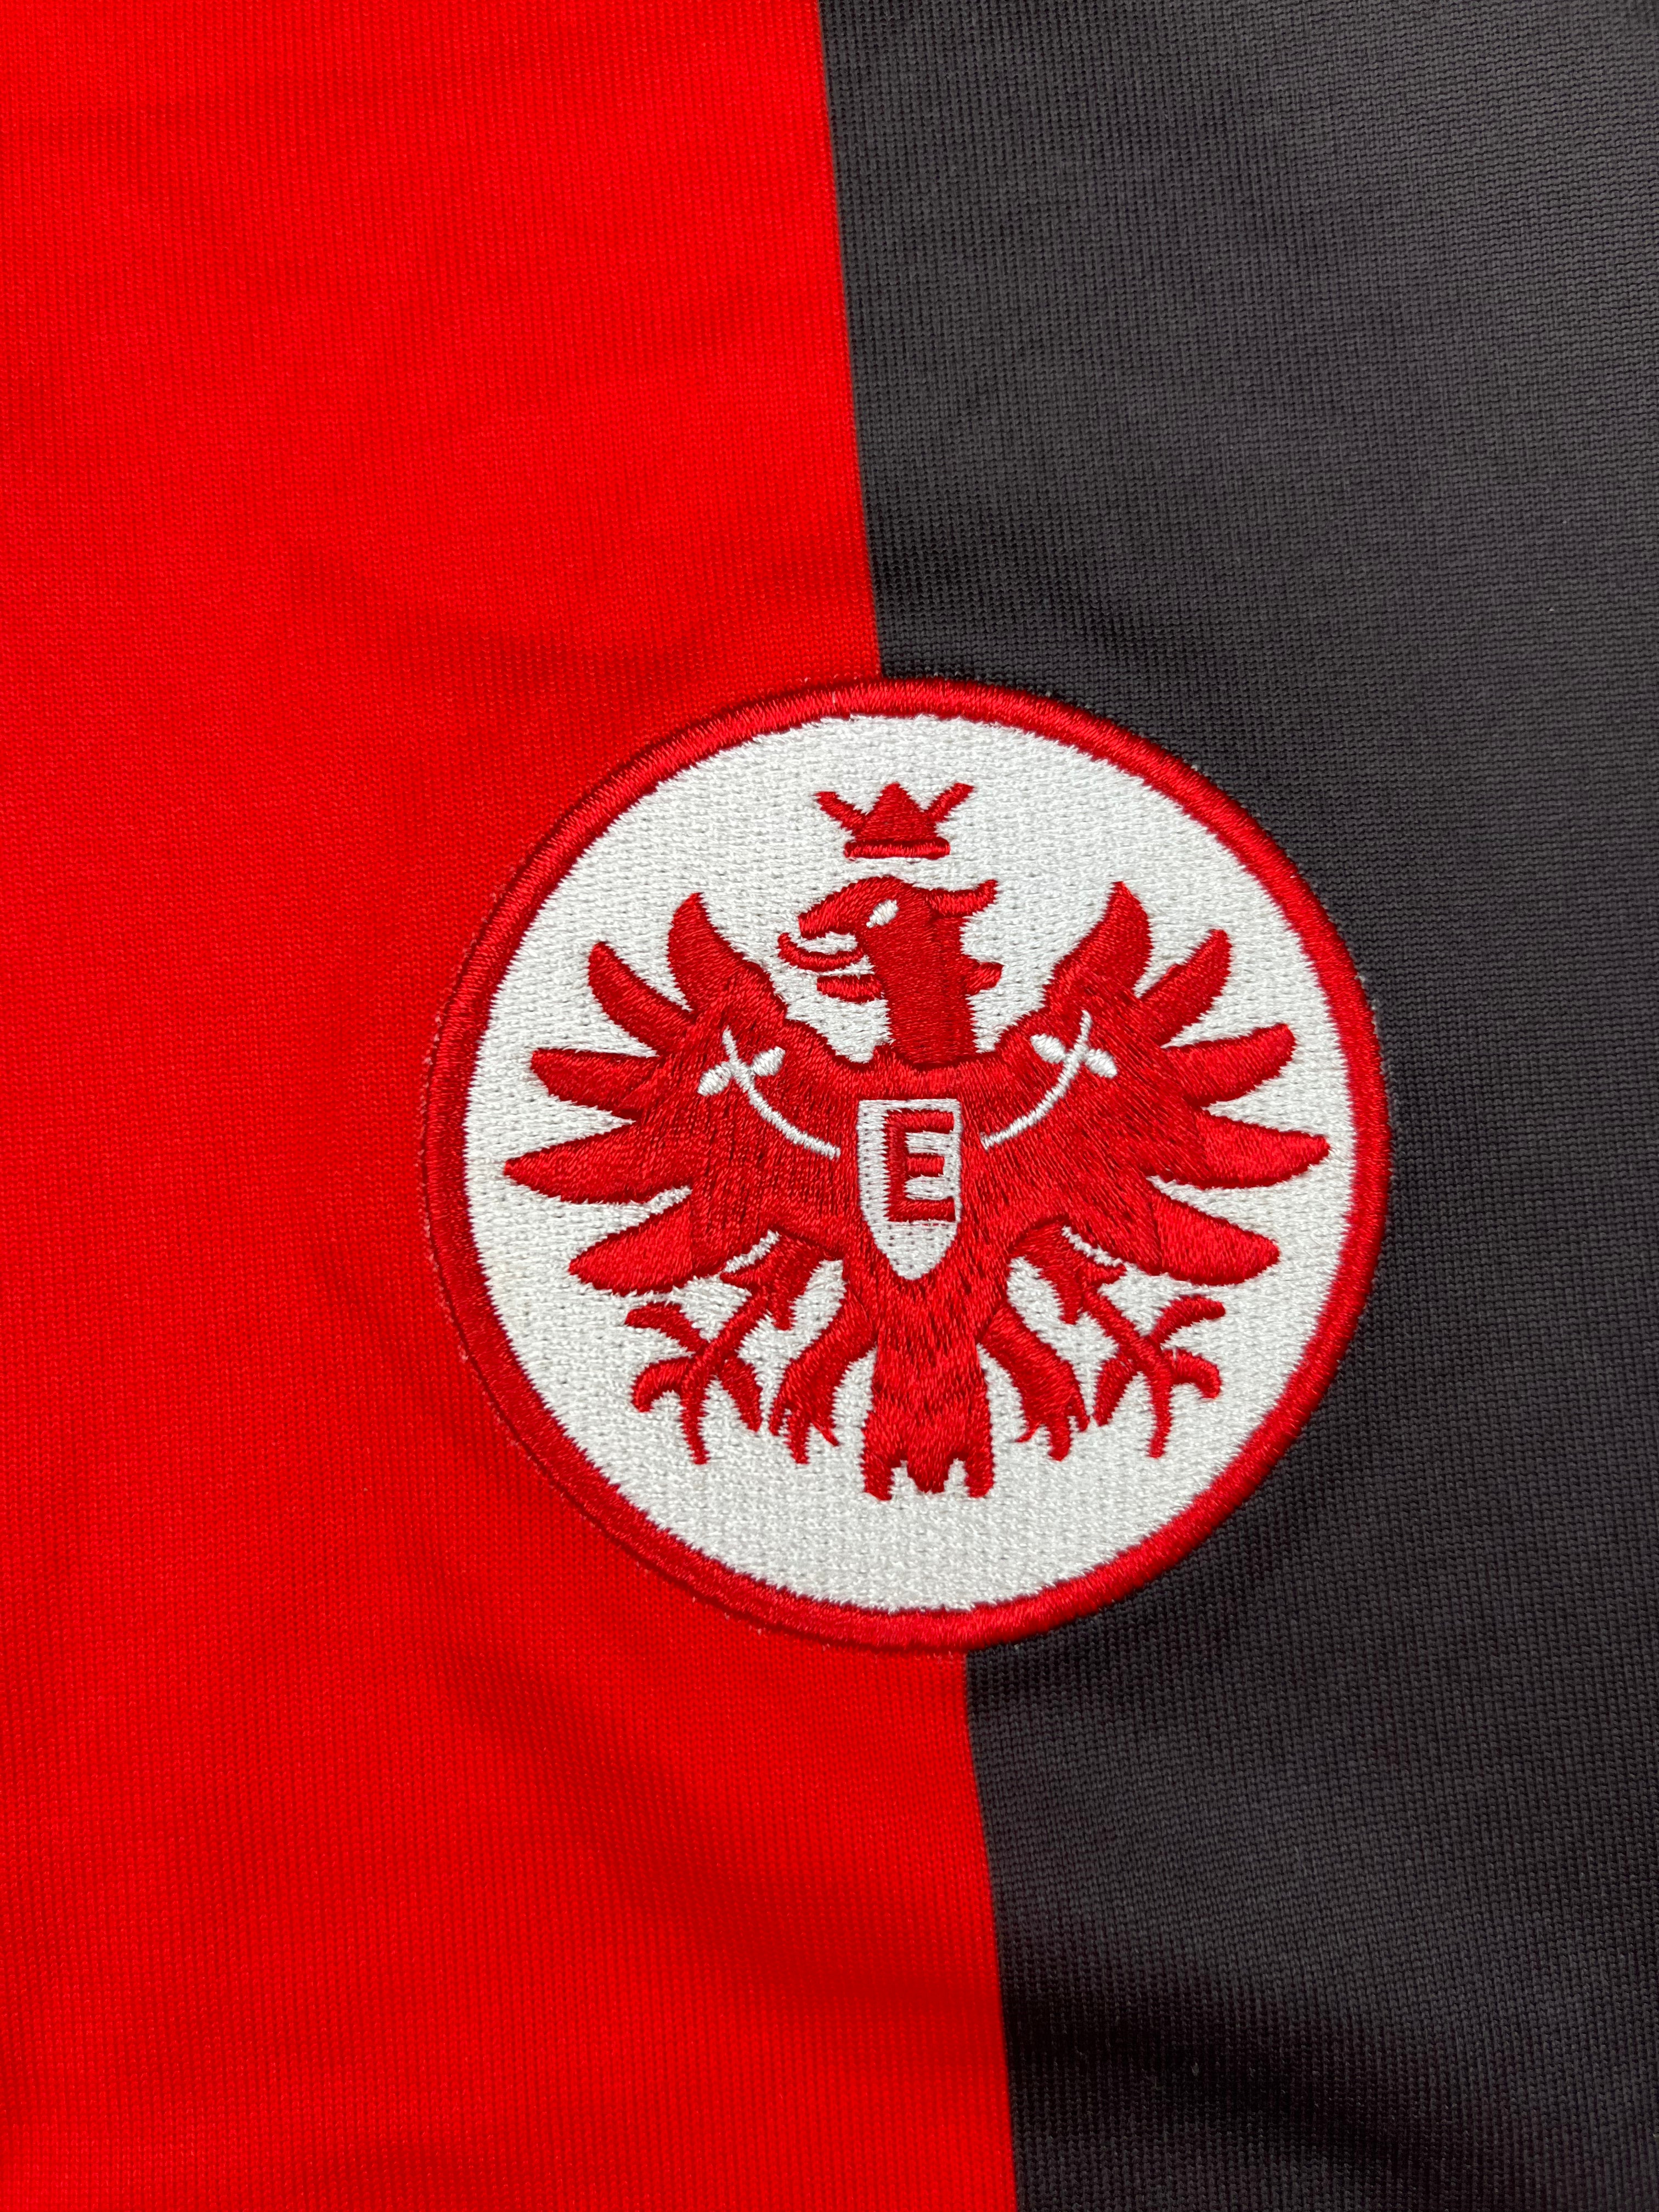 Camiseta de local del Eintracht Frankfurt 2010/12 (XL) 9/10